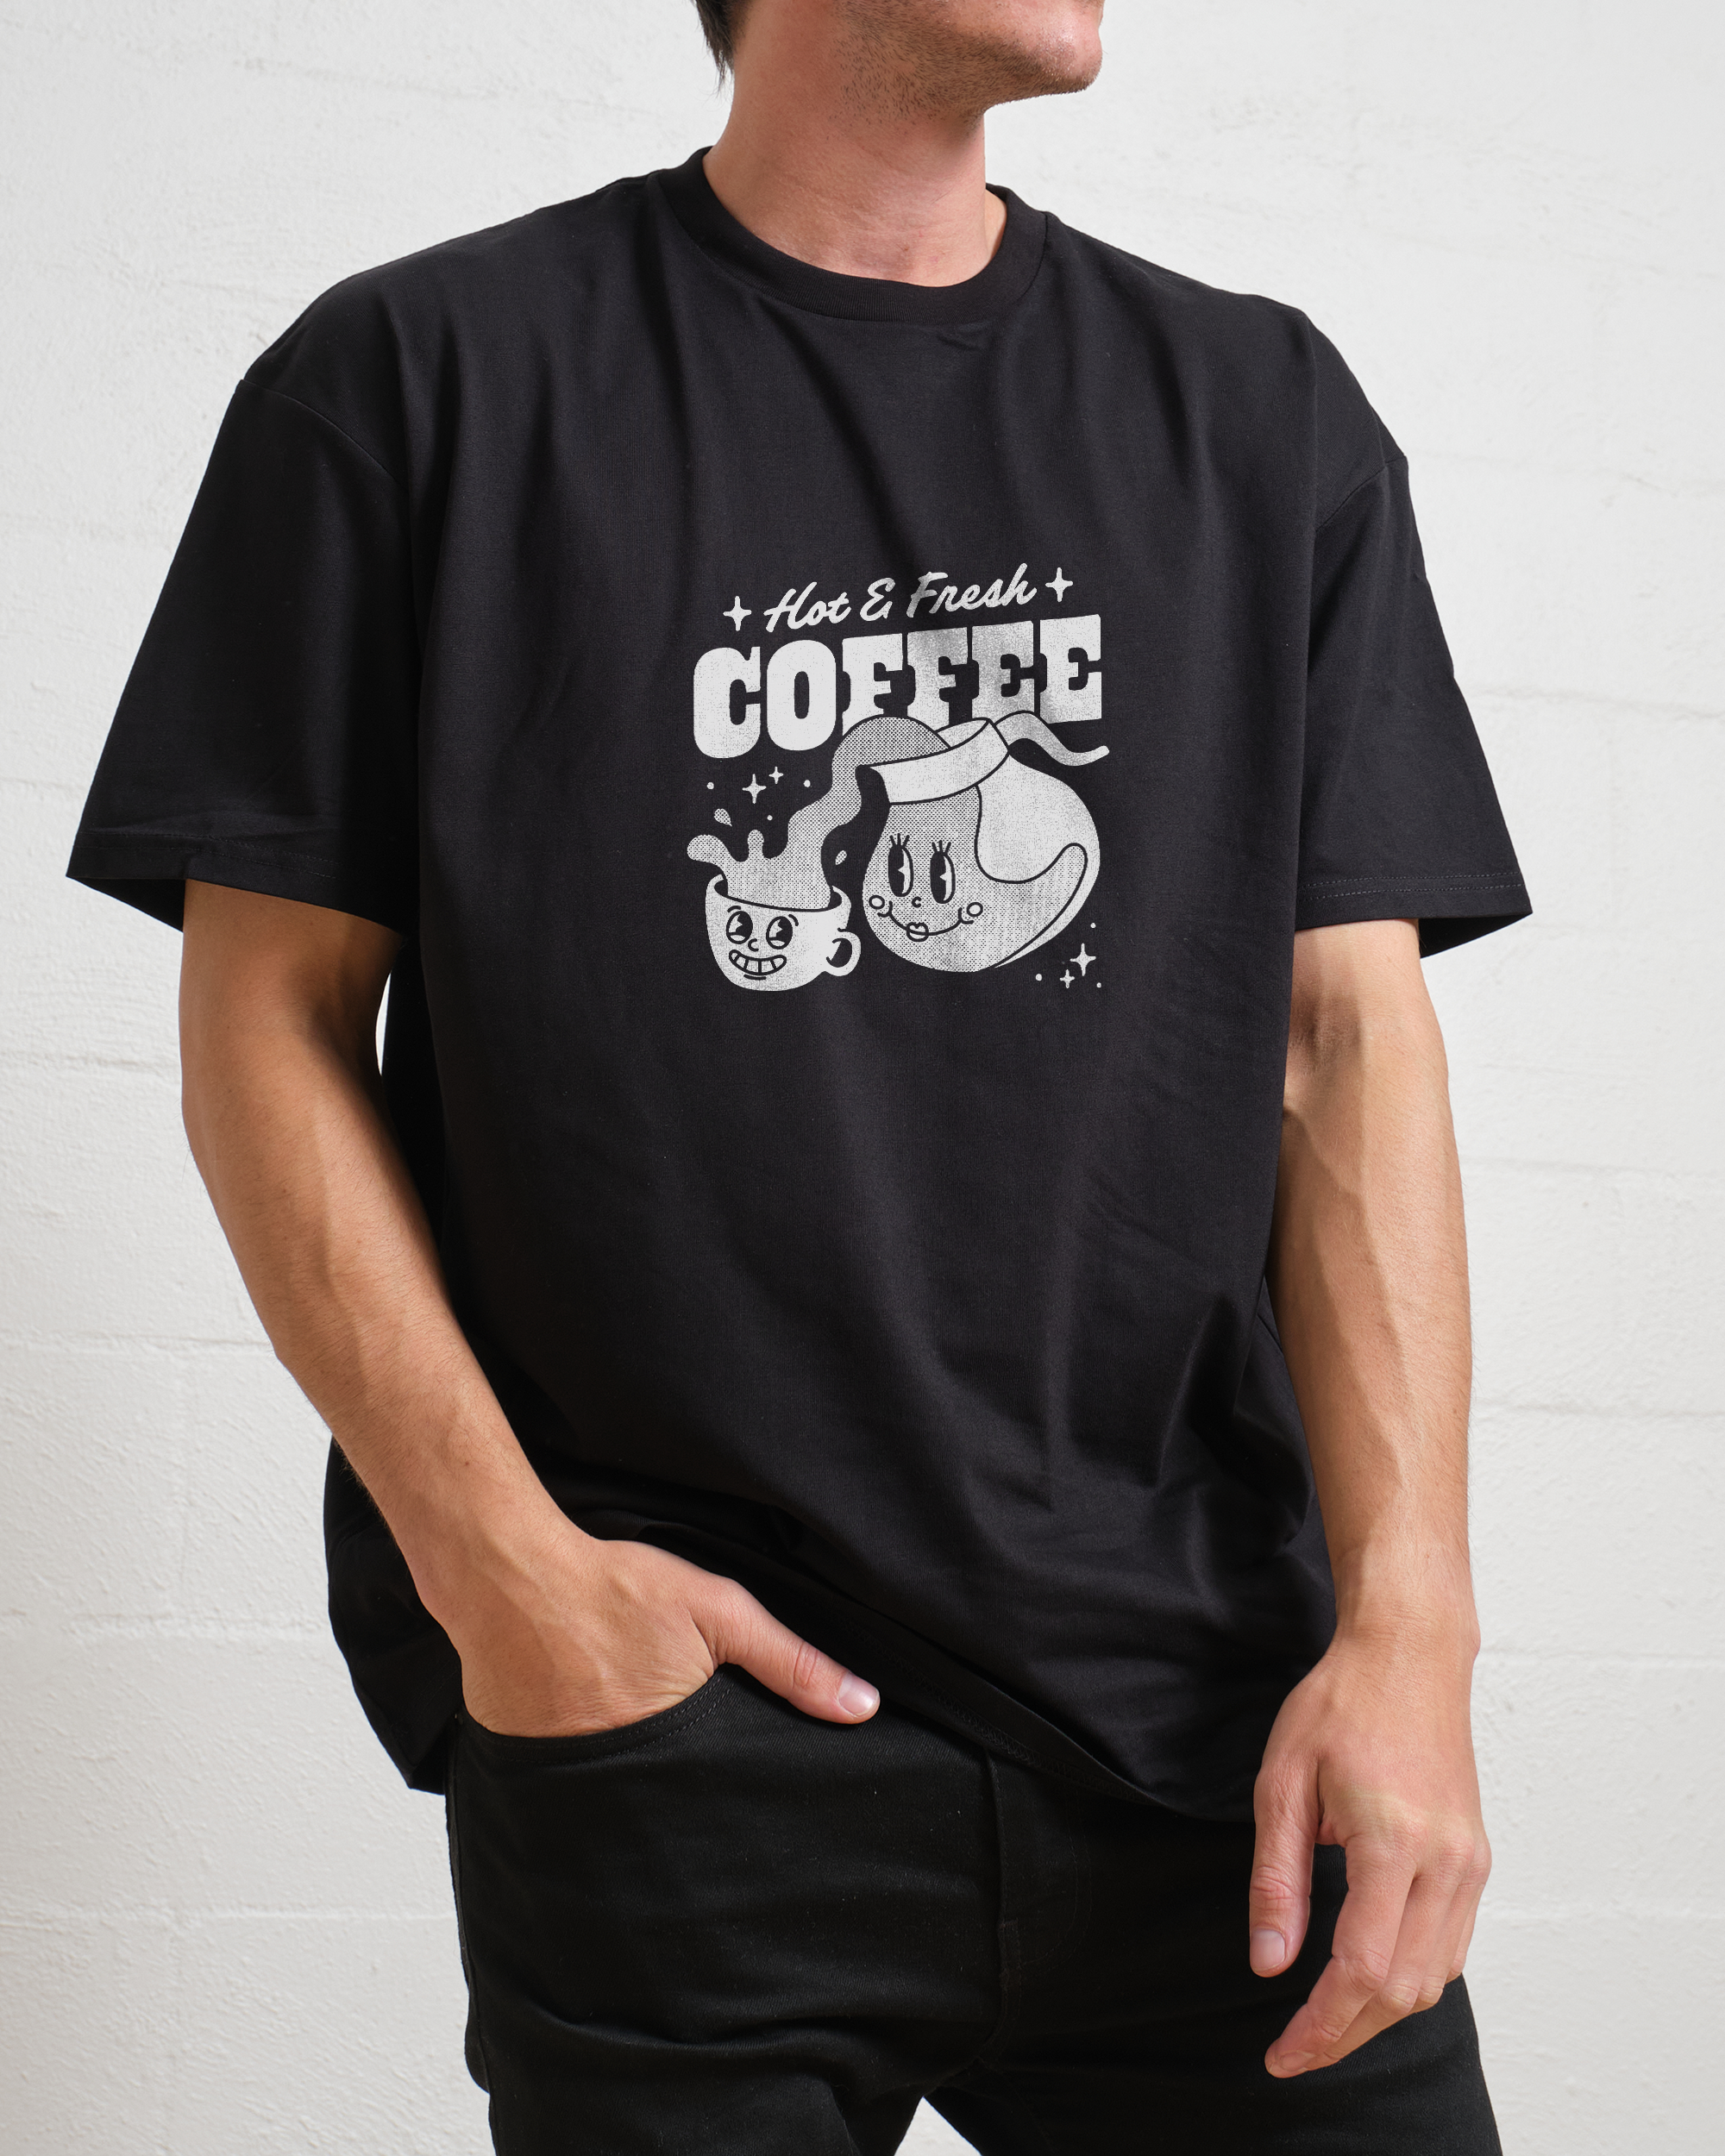 Hot & Fresh Coffee T-Shirt